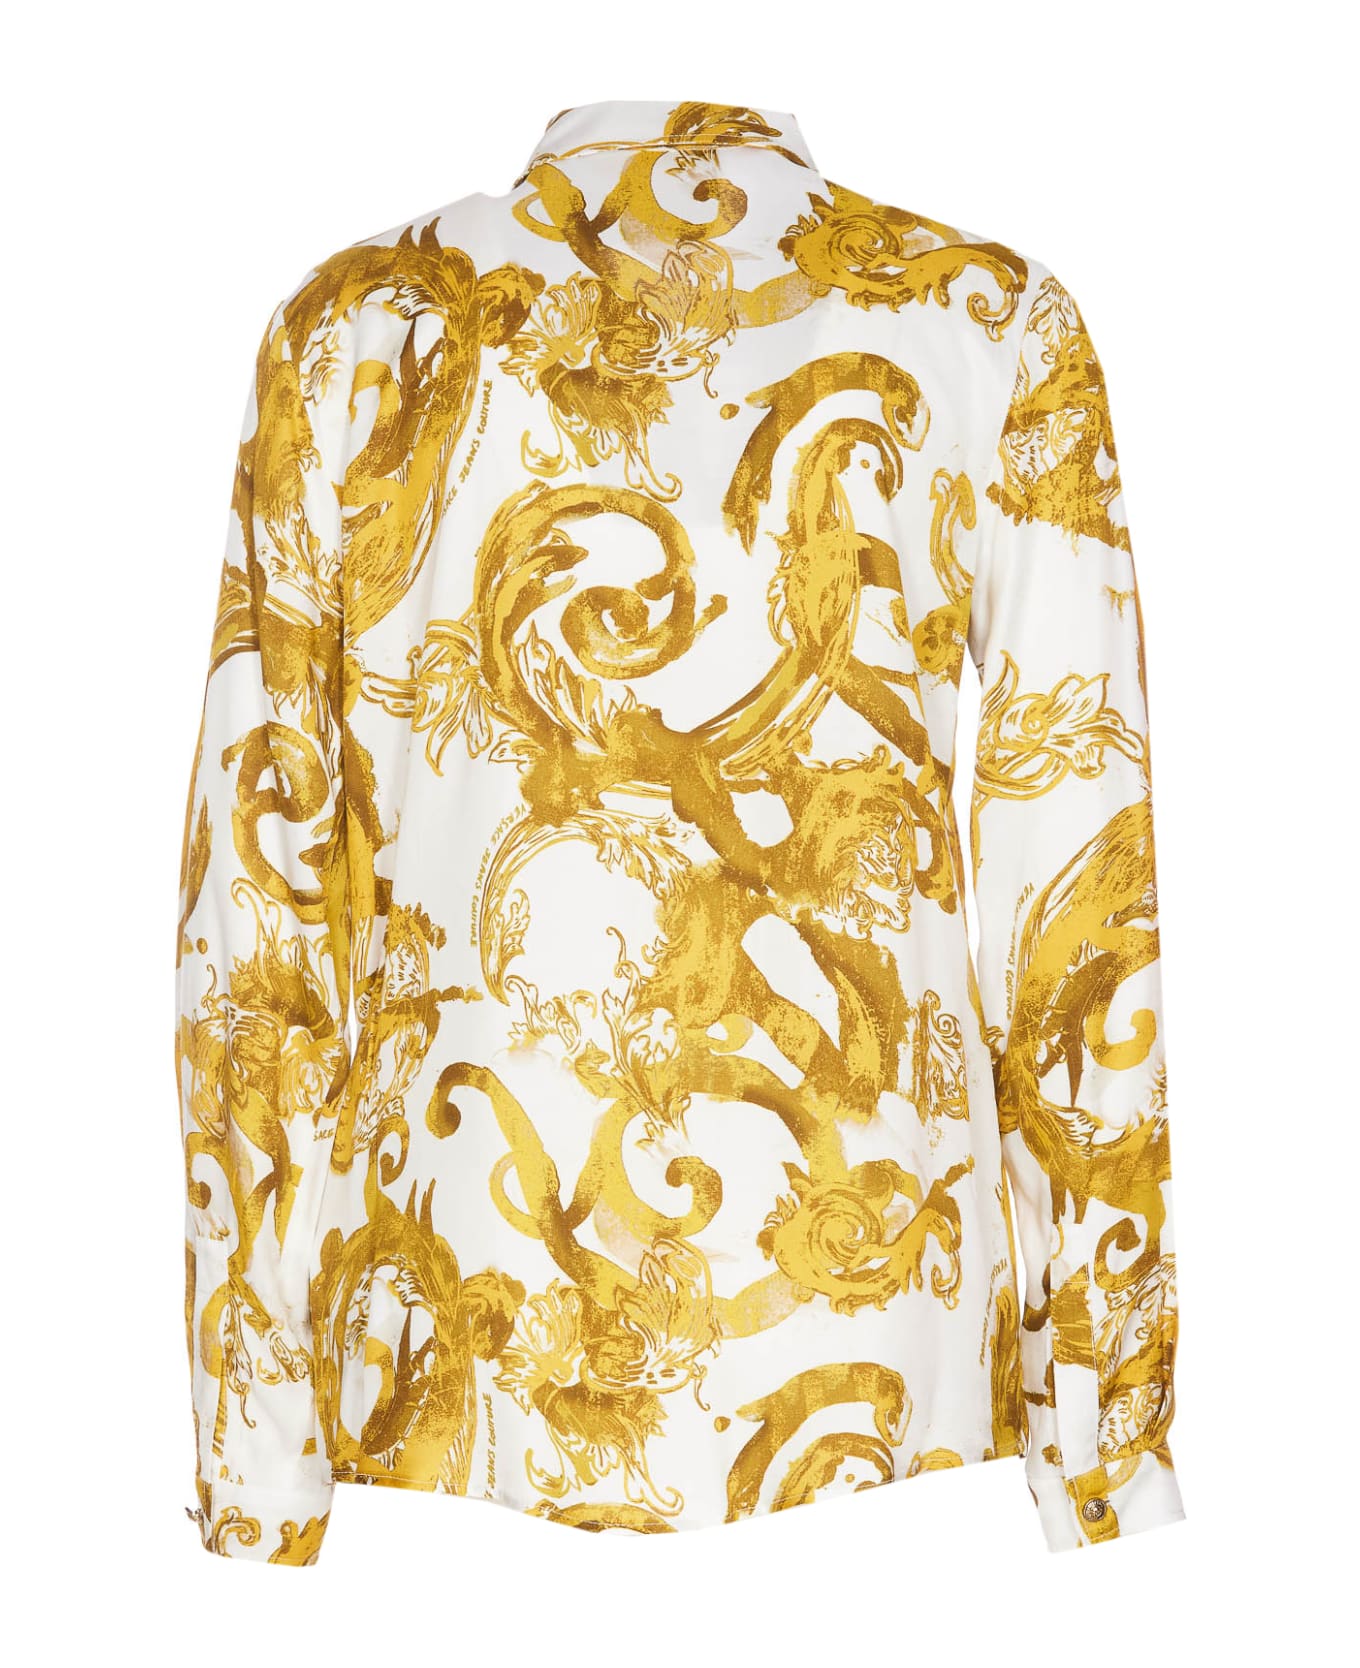 Versace Jeans Couture Watercolour Couture Shirt - Golden